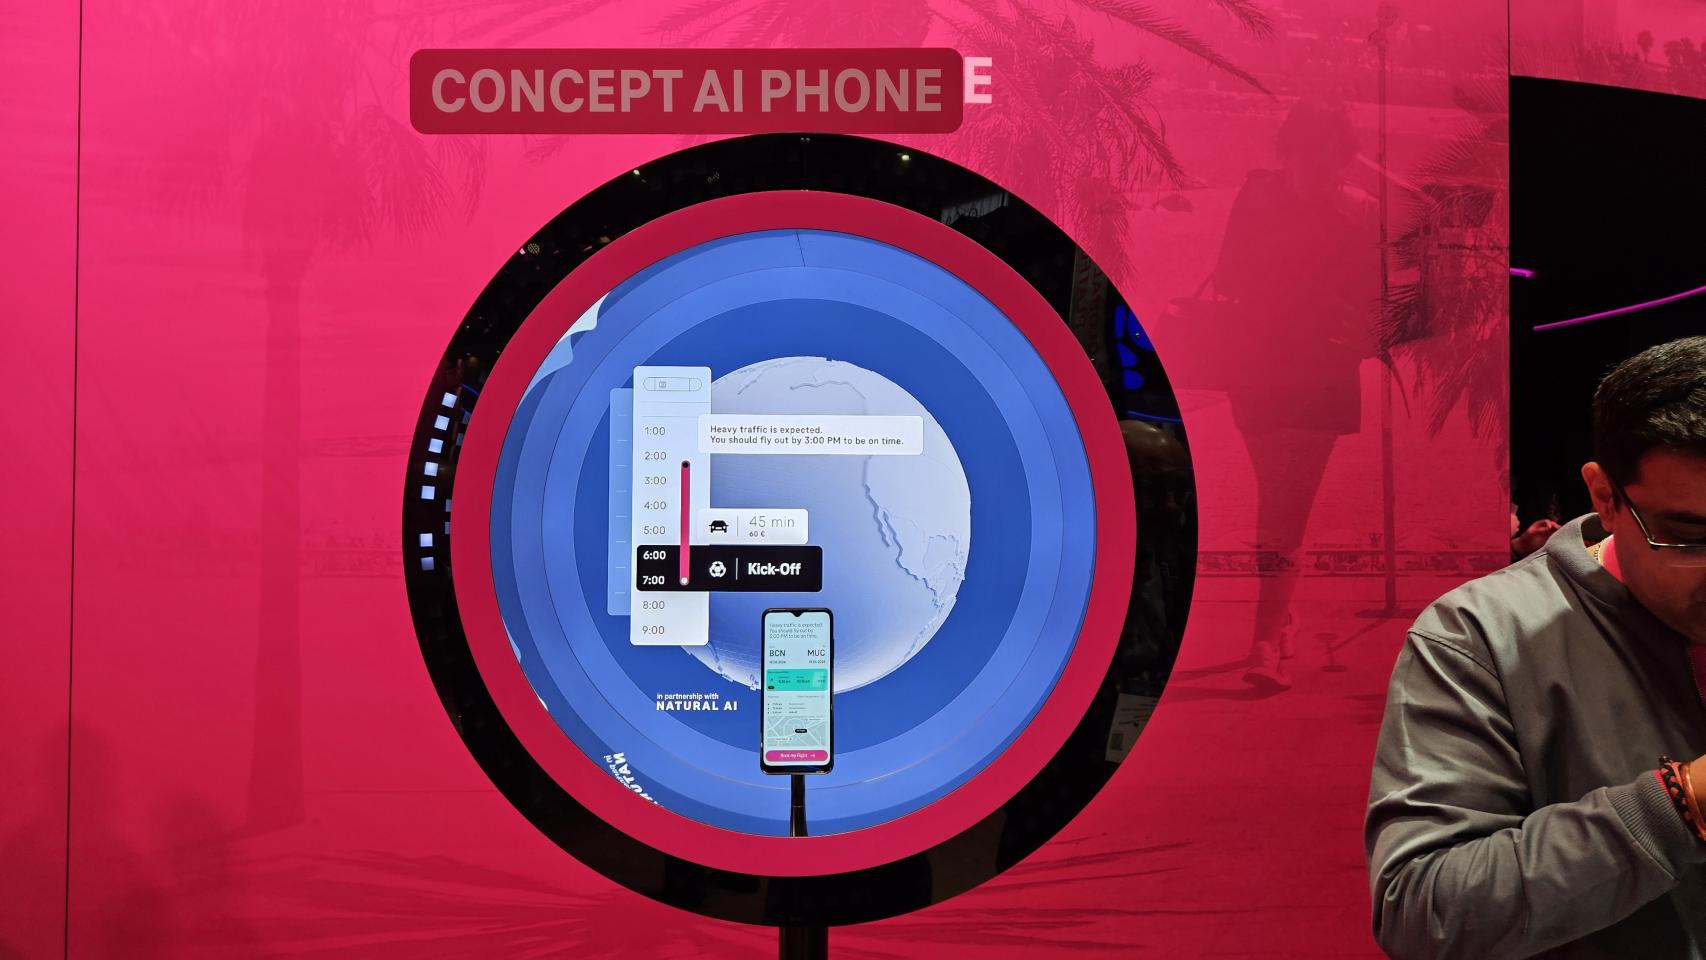 Concepto AI Phone